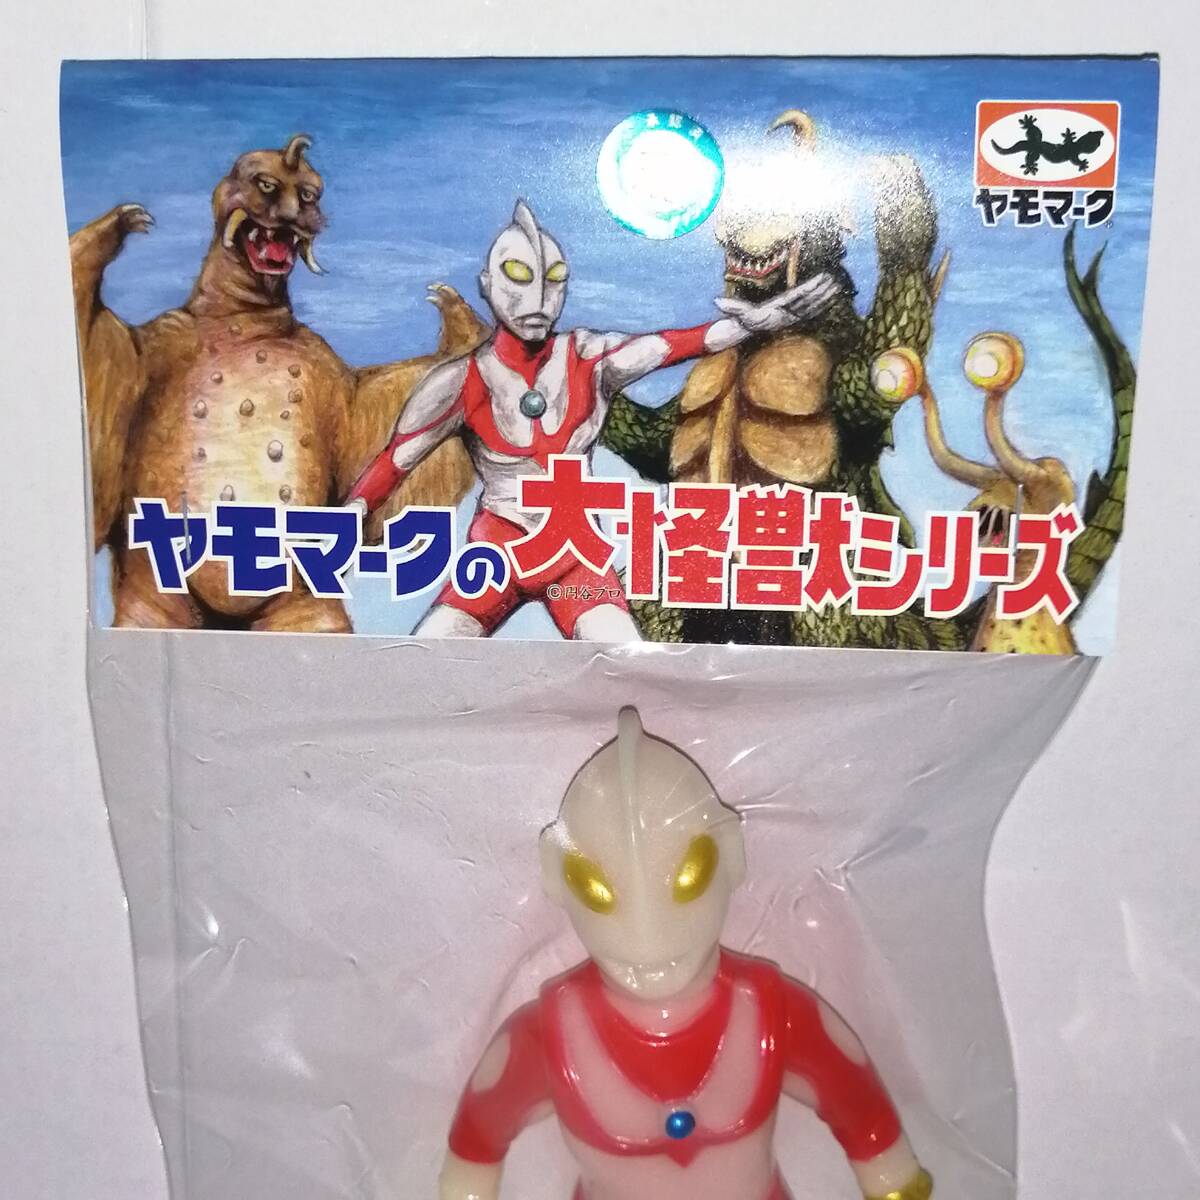 yamo Mark sofvi Return of Ultraman B. свет GID осмотр Ultraman Godzilla bruma.kM1 номер maru солнечный Bear модель meti com игрушка 